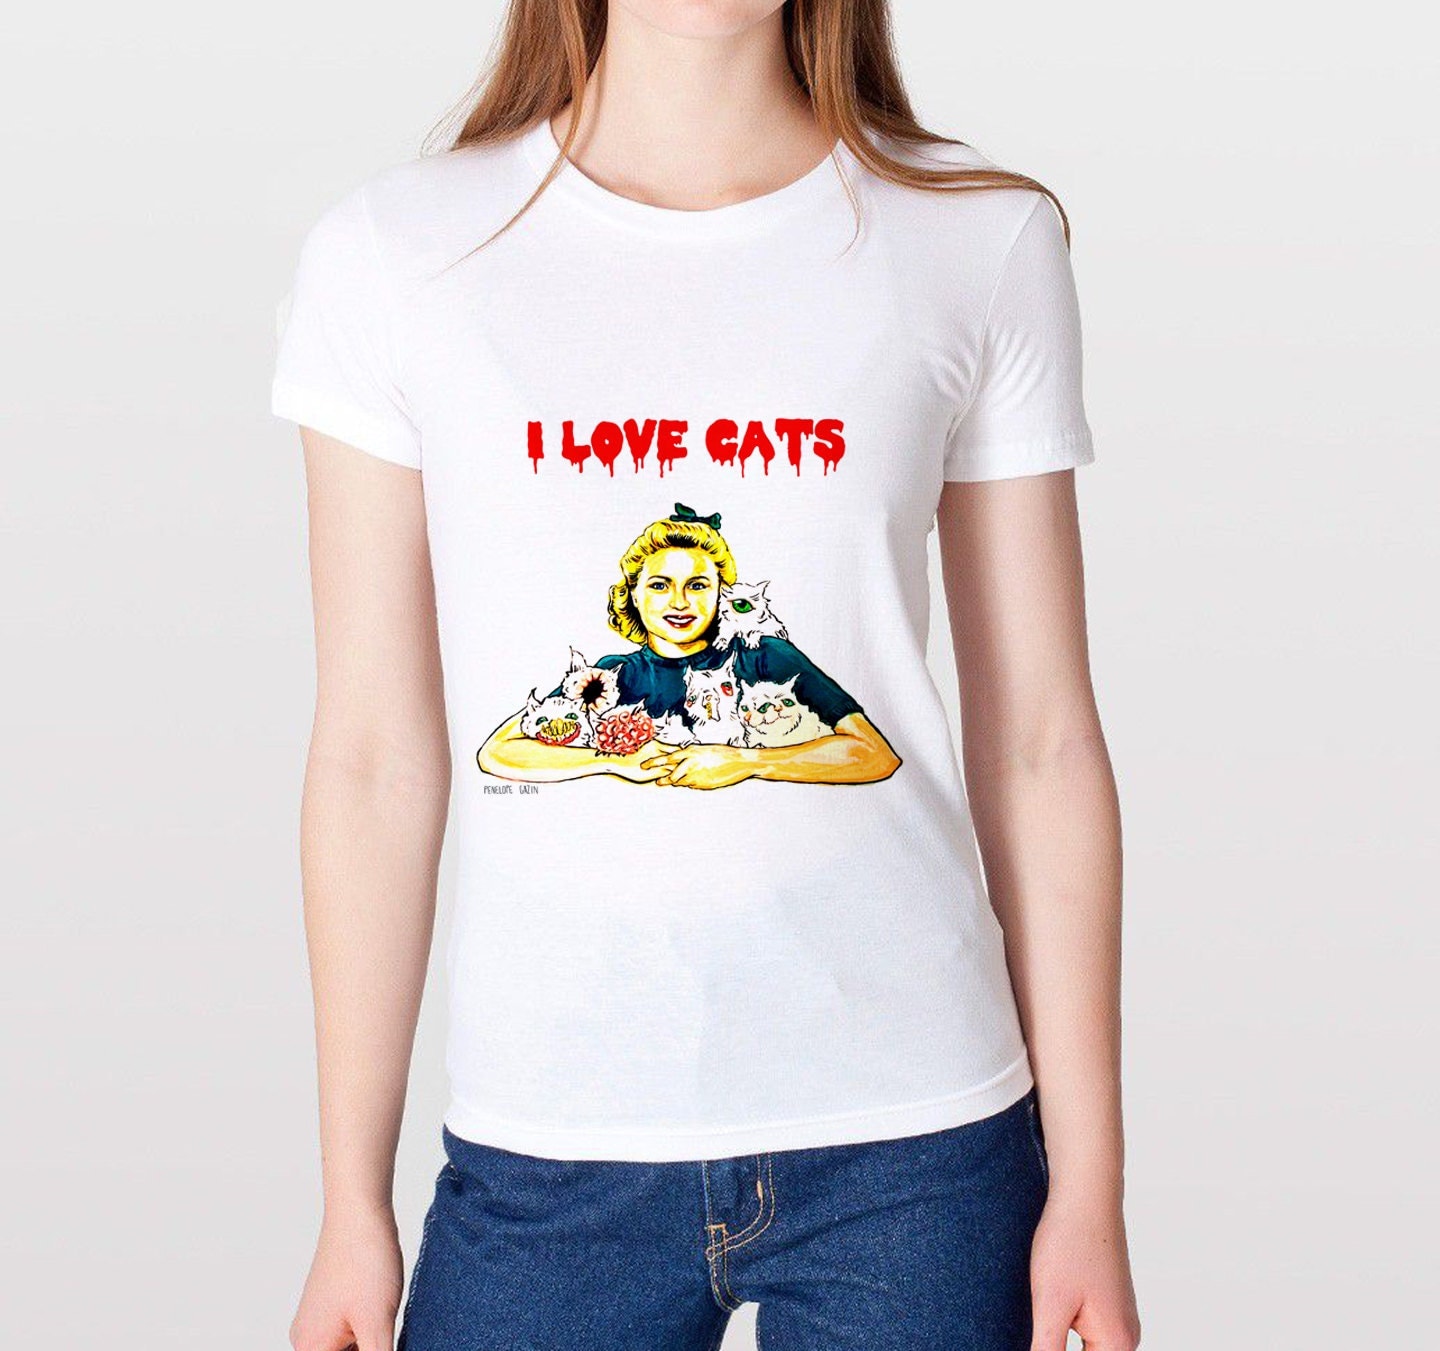 I LOVE CATS Tshirt